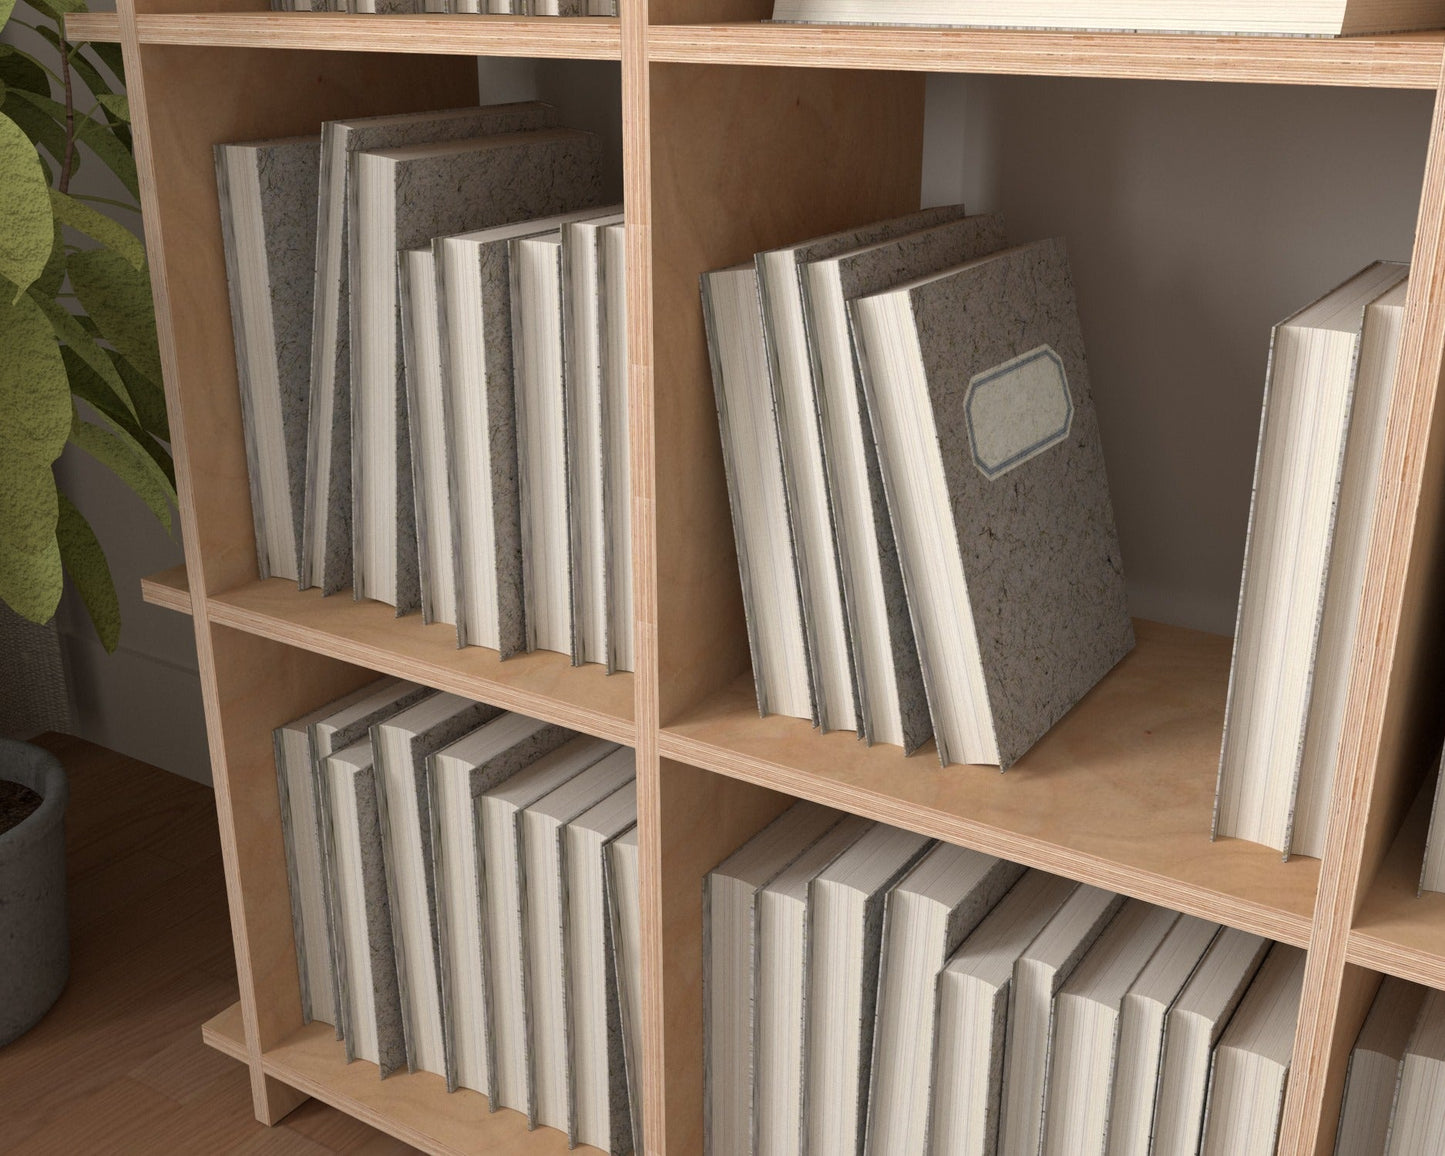 4x2 Modern Modular Plywood Bookshelf Kallax modules japandi design for vinyl records, books, music studio, home - 150x80x33cm / 59x32x13”